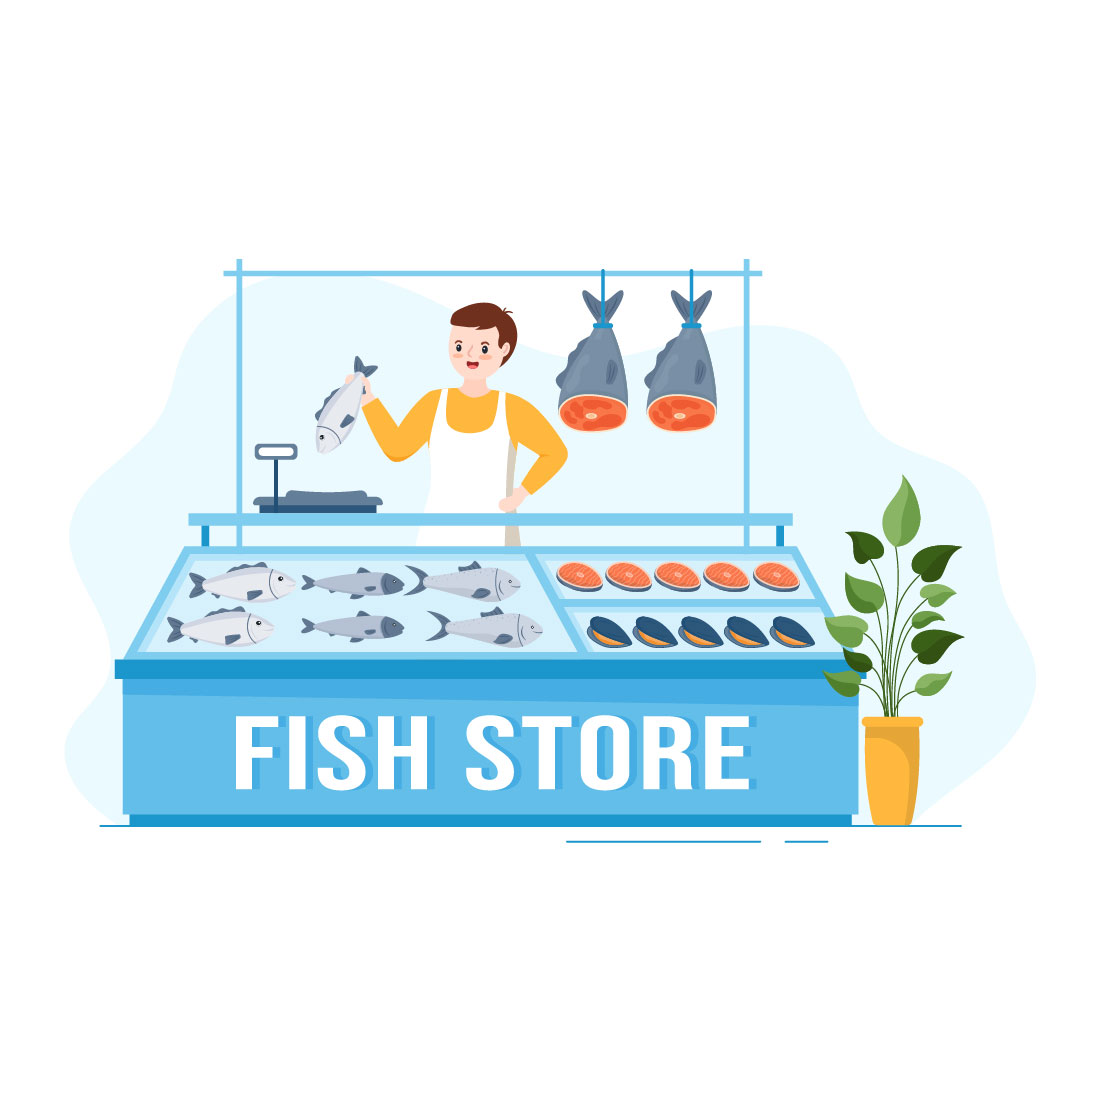 Fish Shop Cartoon Design Illustration cover image.